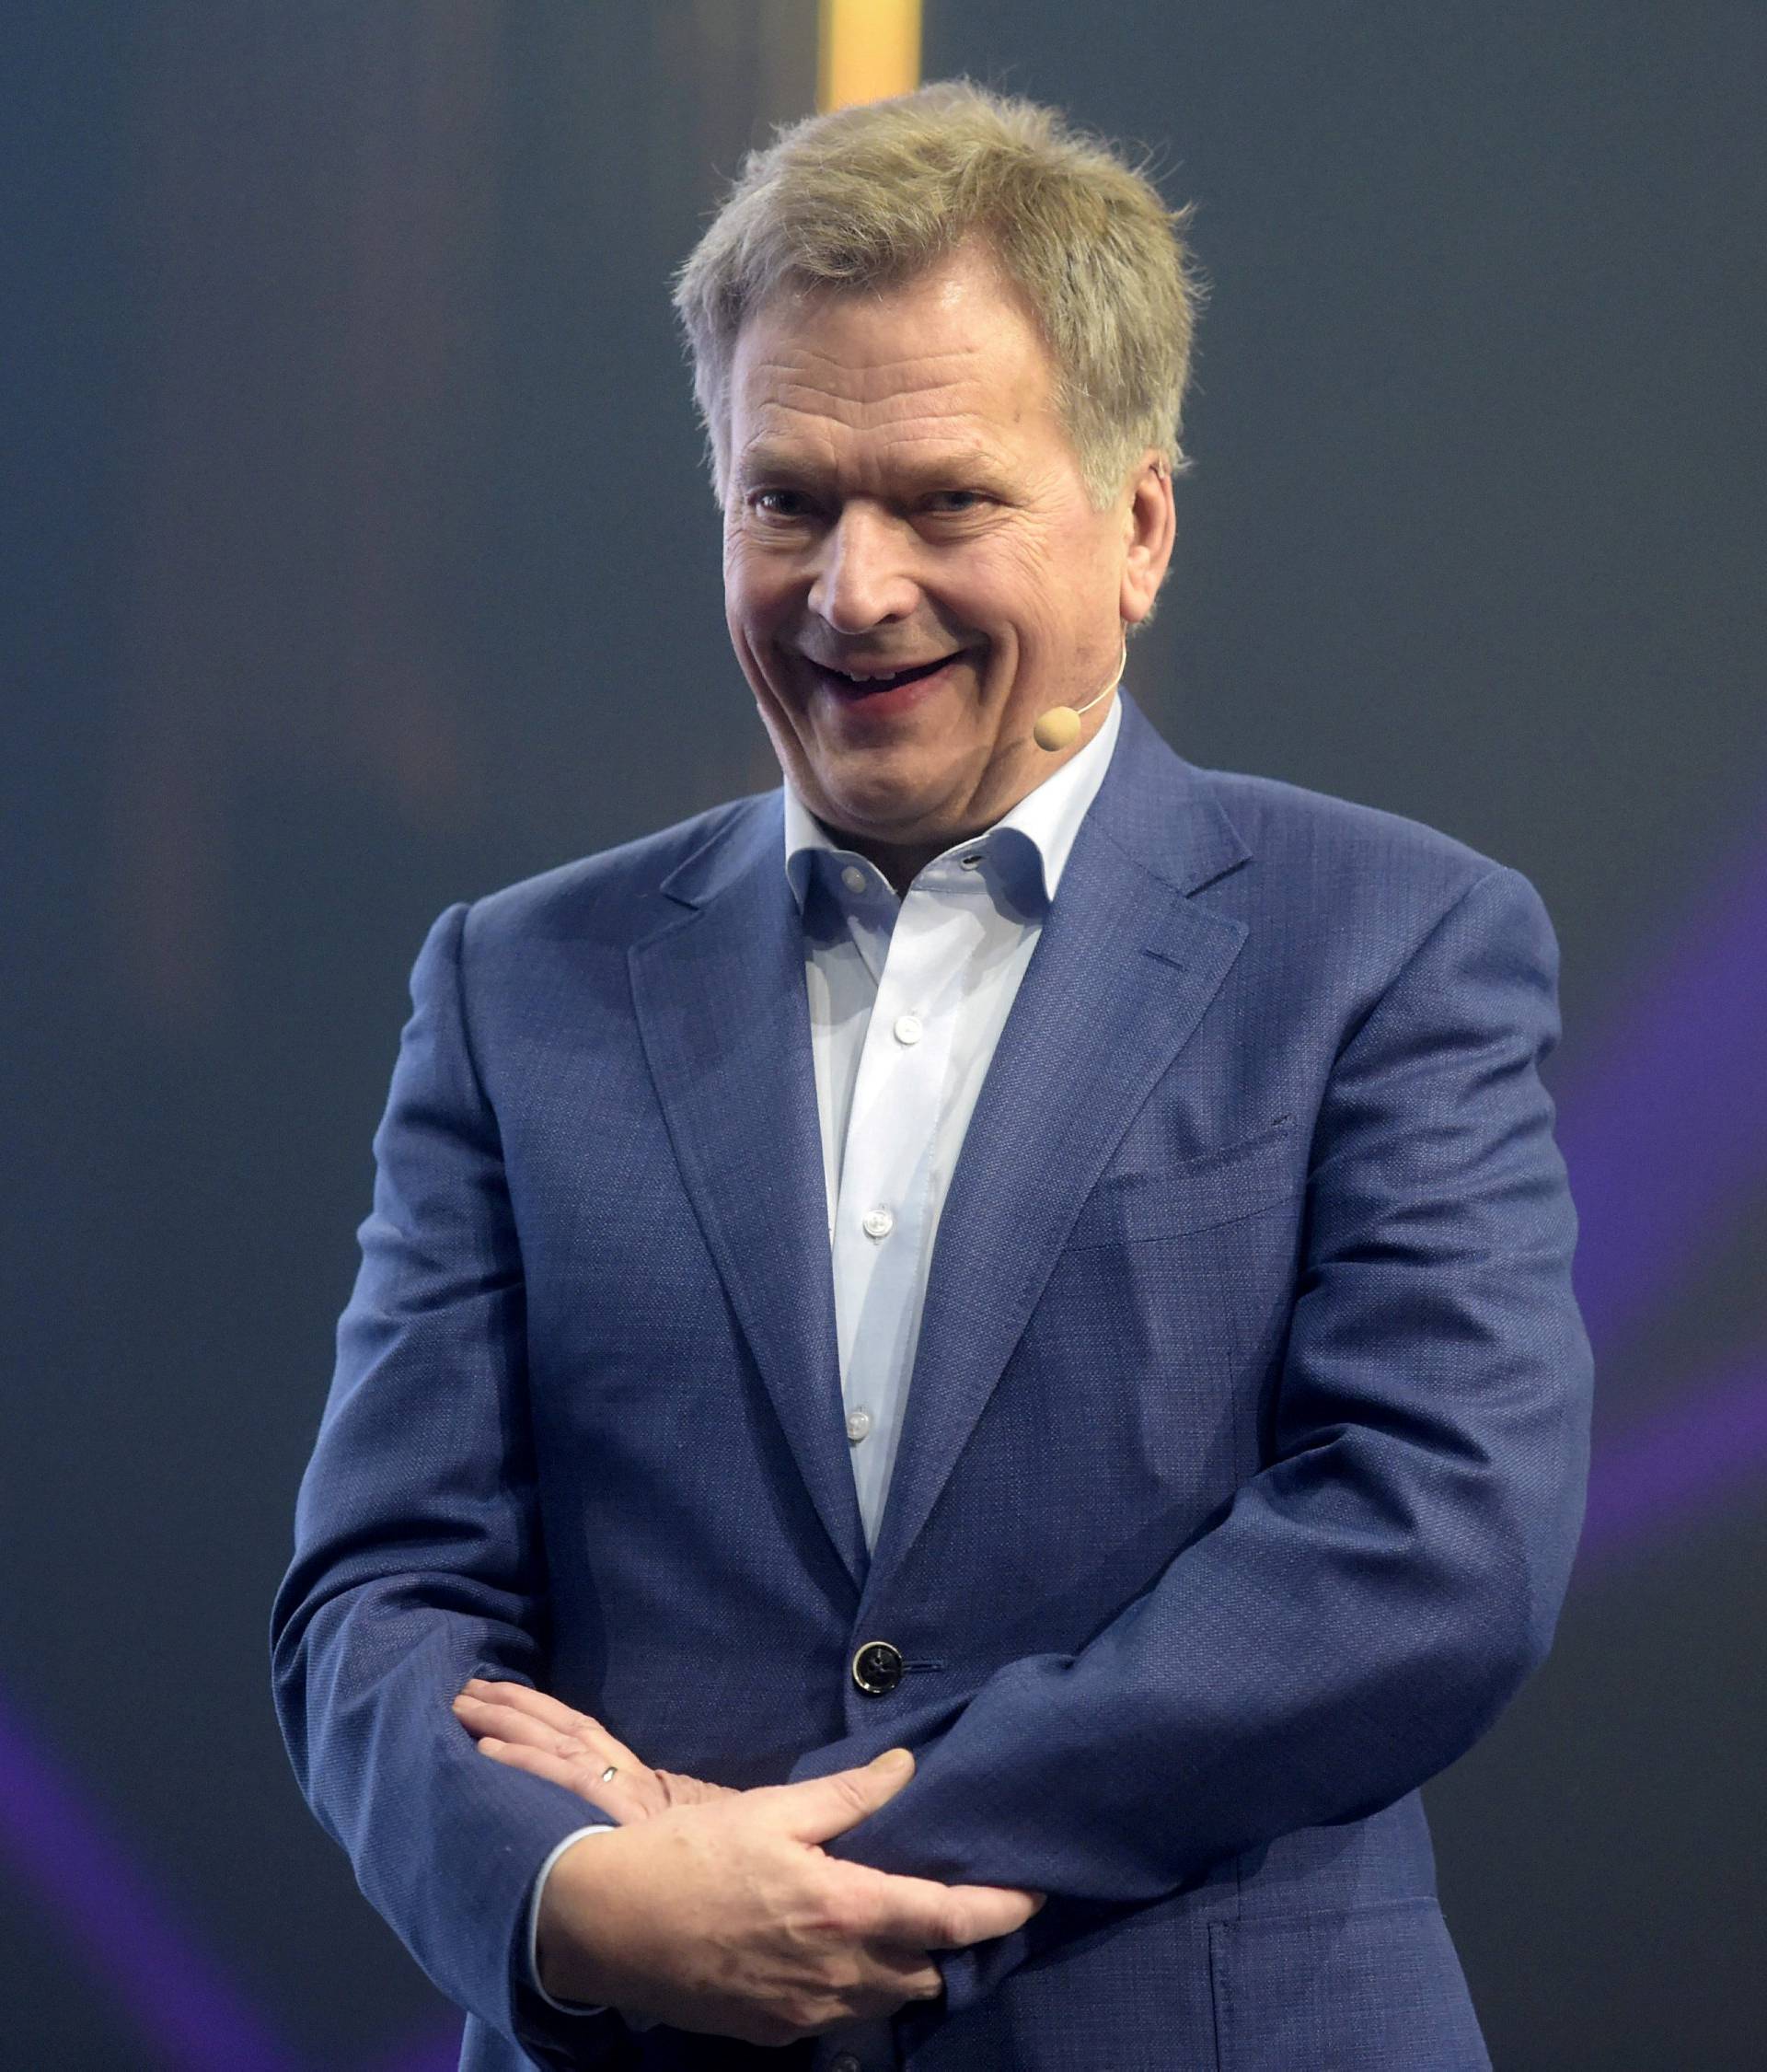 FILE PHOTO: Finnish President Niinisto speaks during Slush 2017 startup and technology event in Helsinki